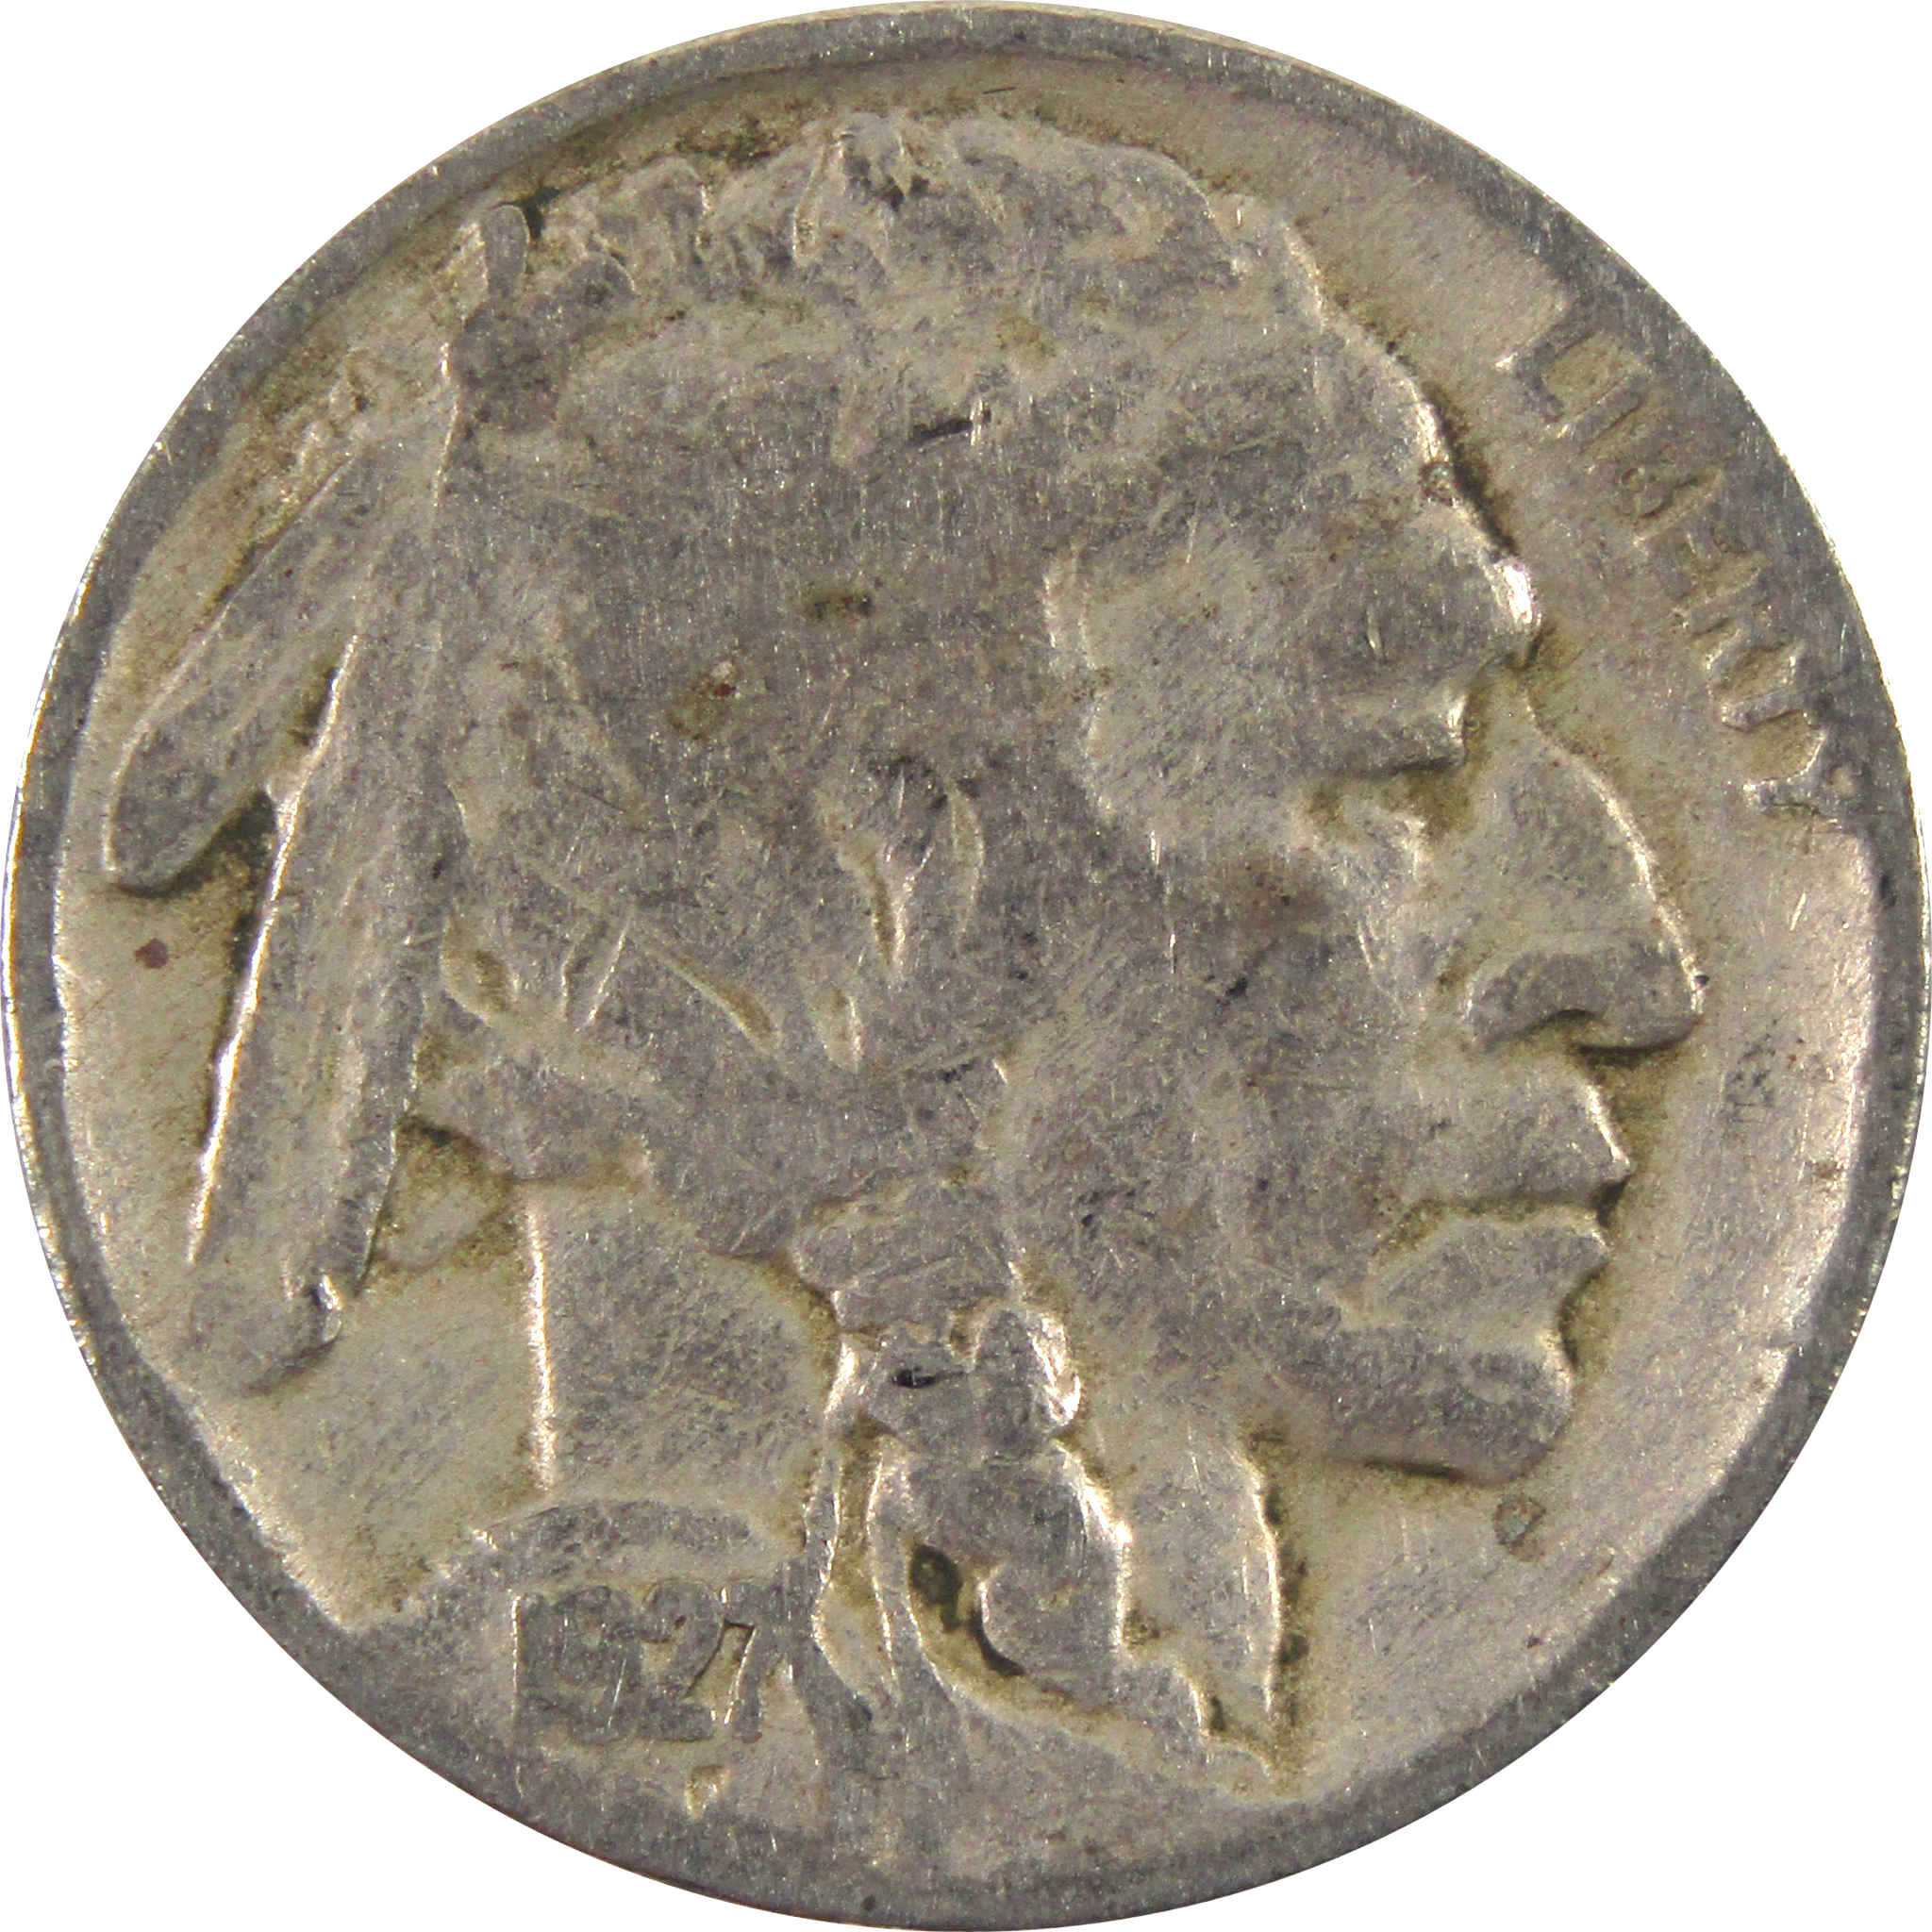 1927 Indian Head Buffalo Nickel AG About Good 5c Coin